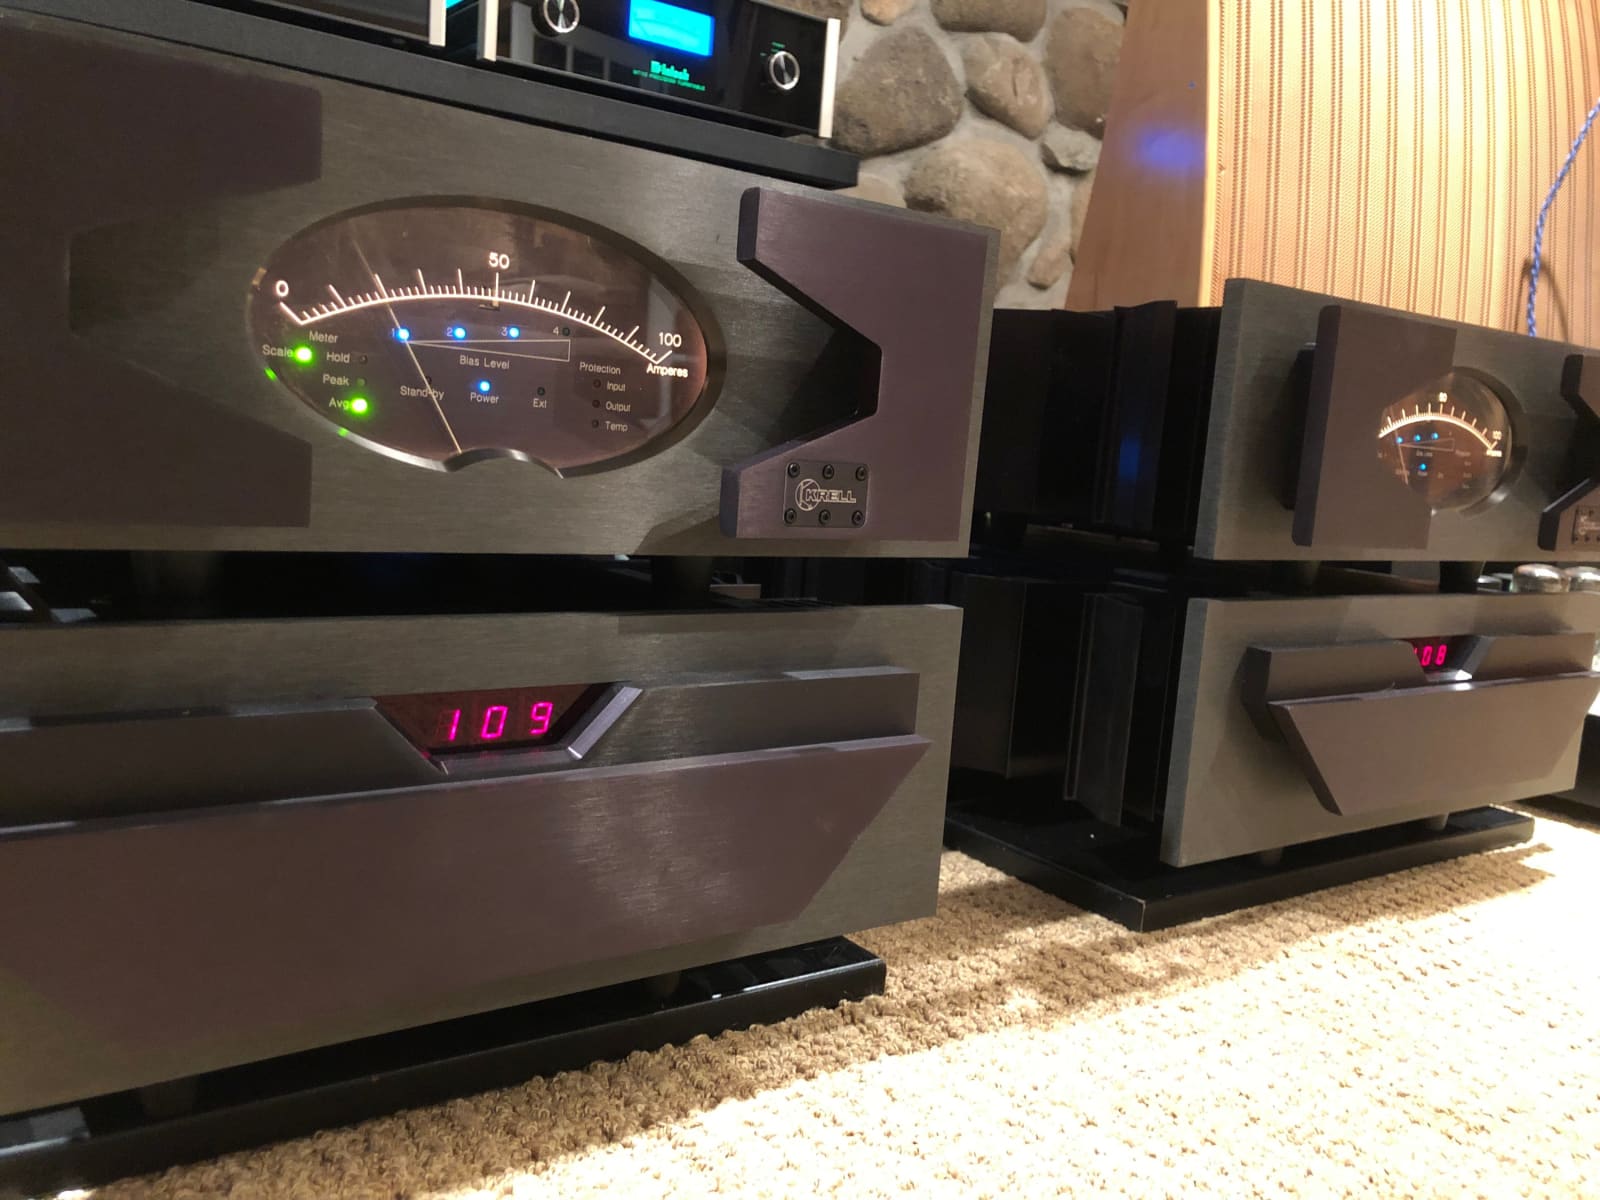 Krell Audio Standard (Kas) Flagship Amplifiers - The Best Of Complete Set Speakers